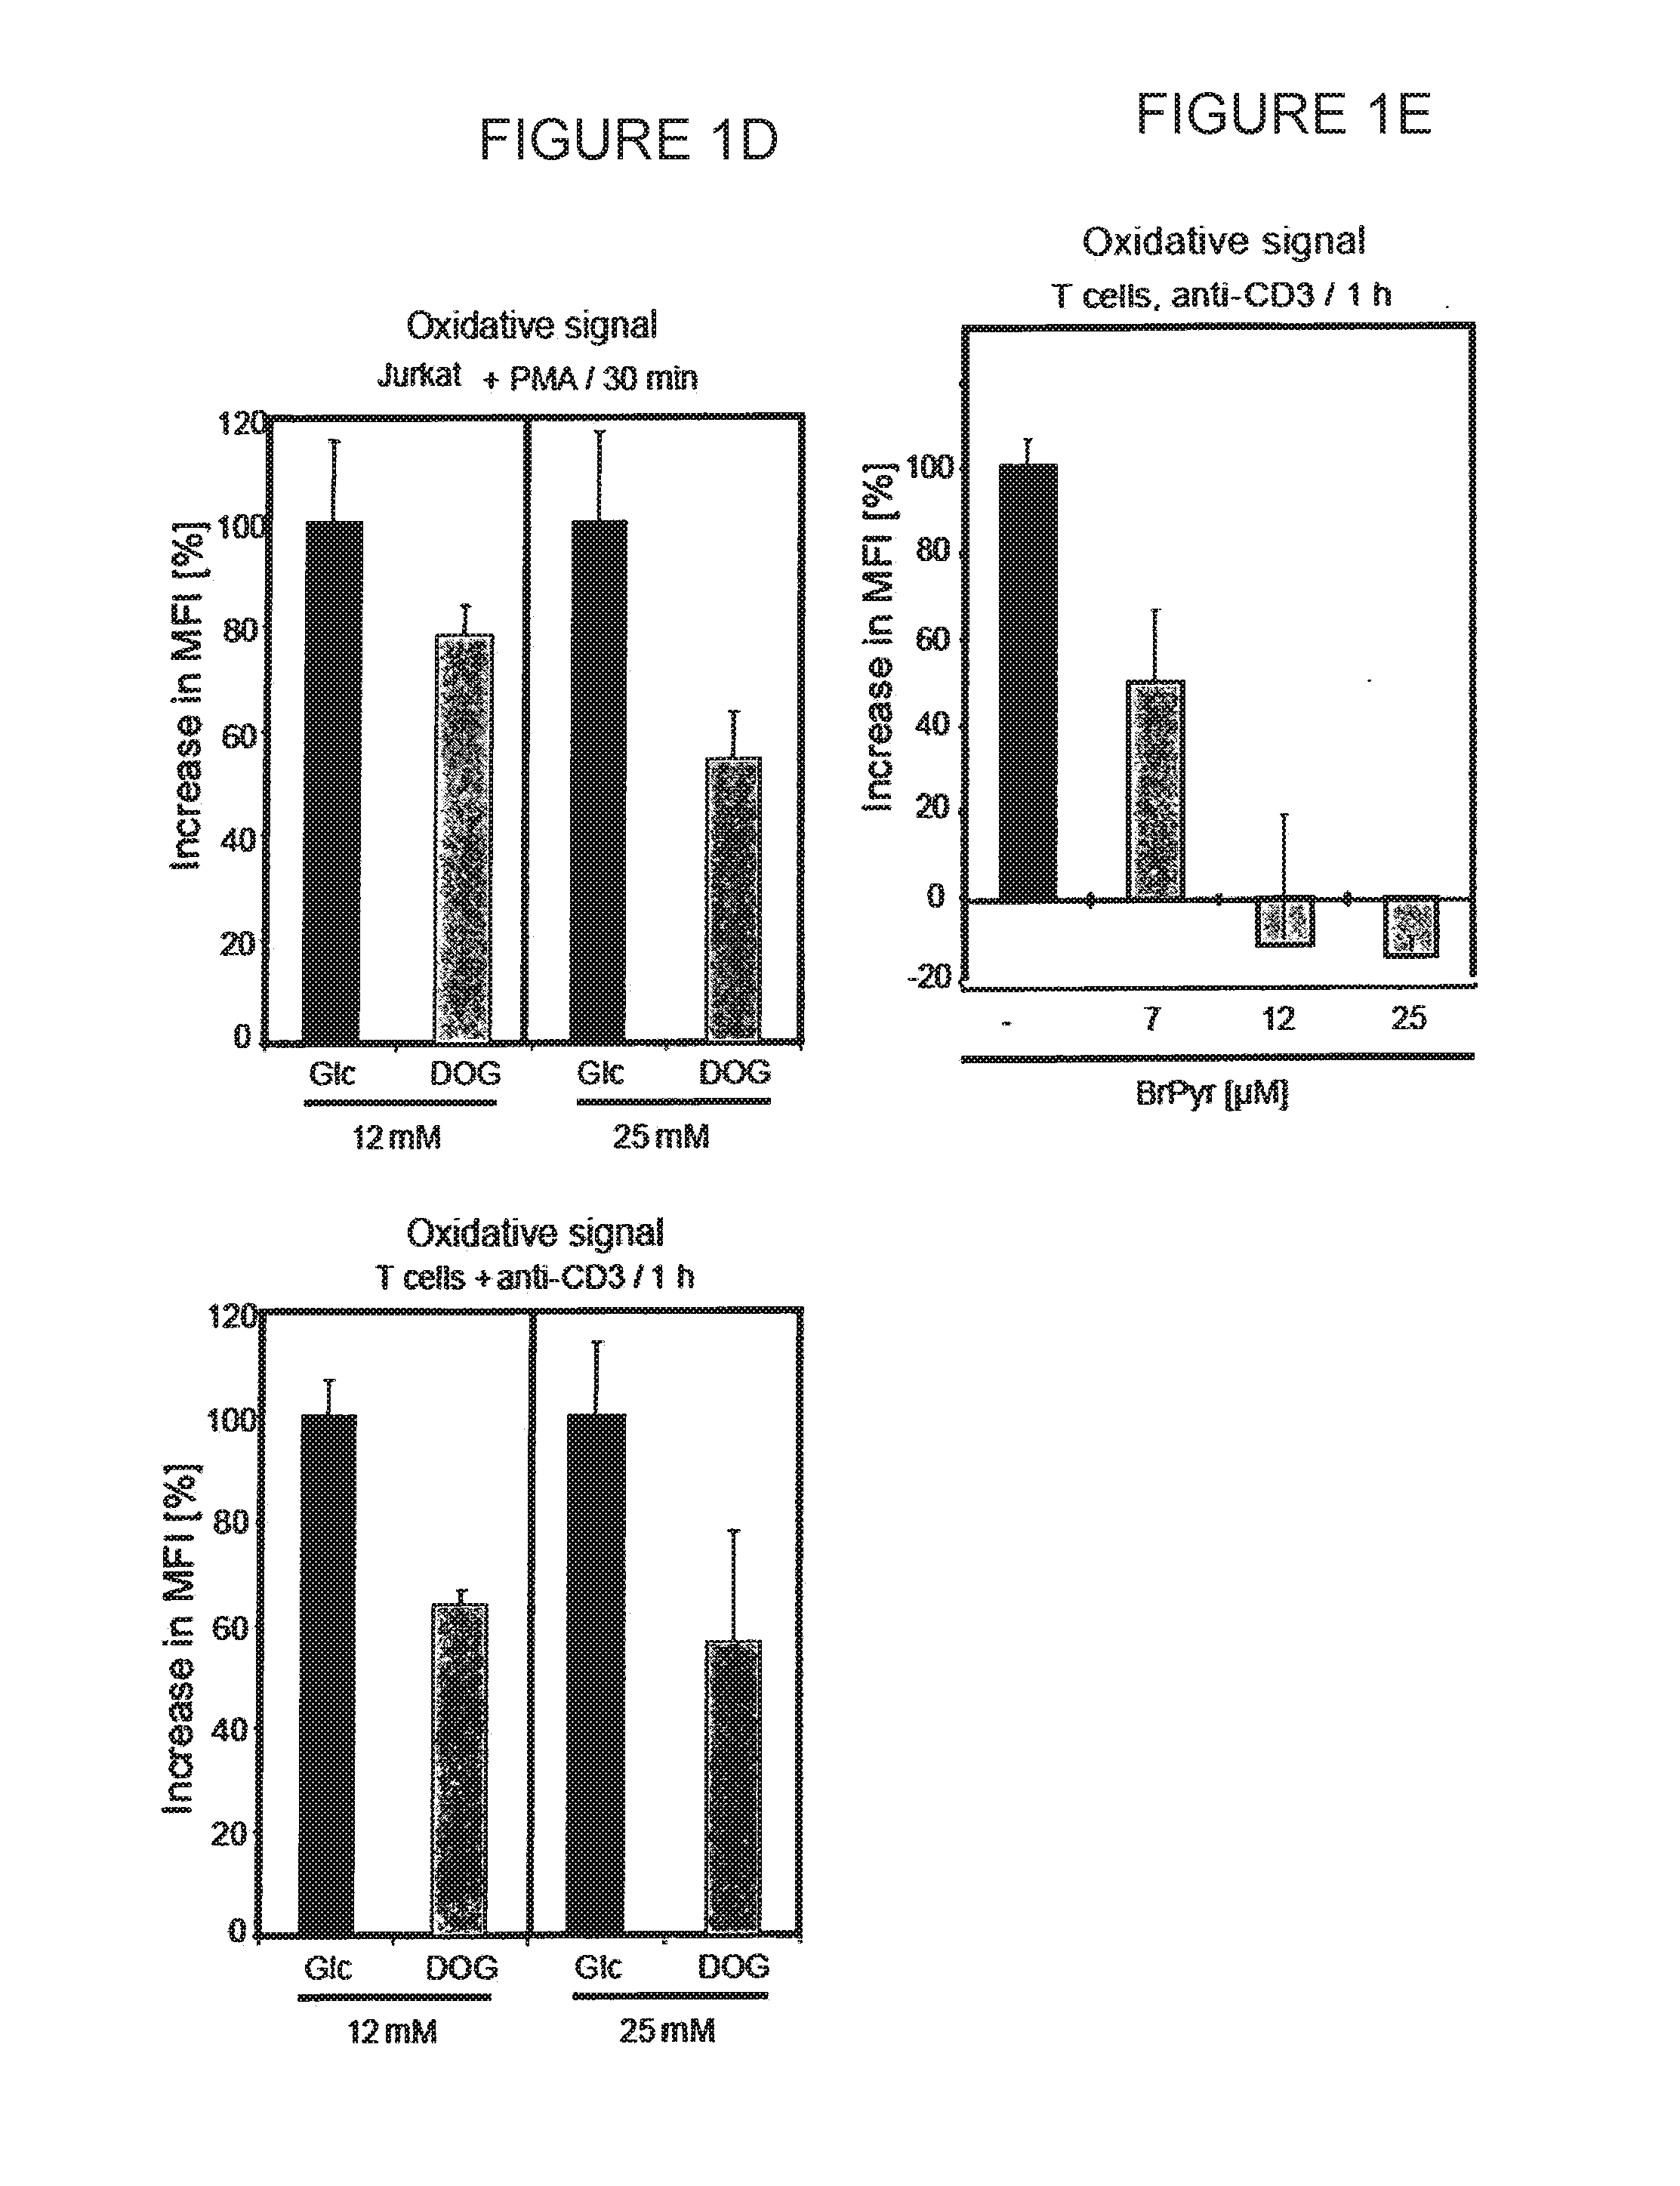 Modulators of adp-dependent glucokinase (ADPGK) and glycerol-3-phosphate dehydrogenase (GPD2) for therapy